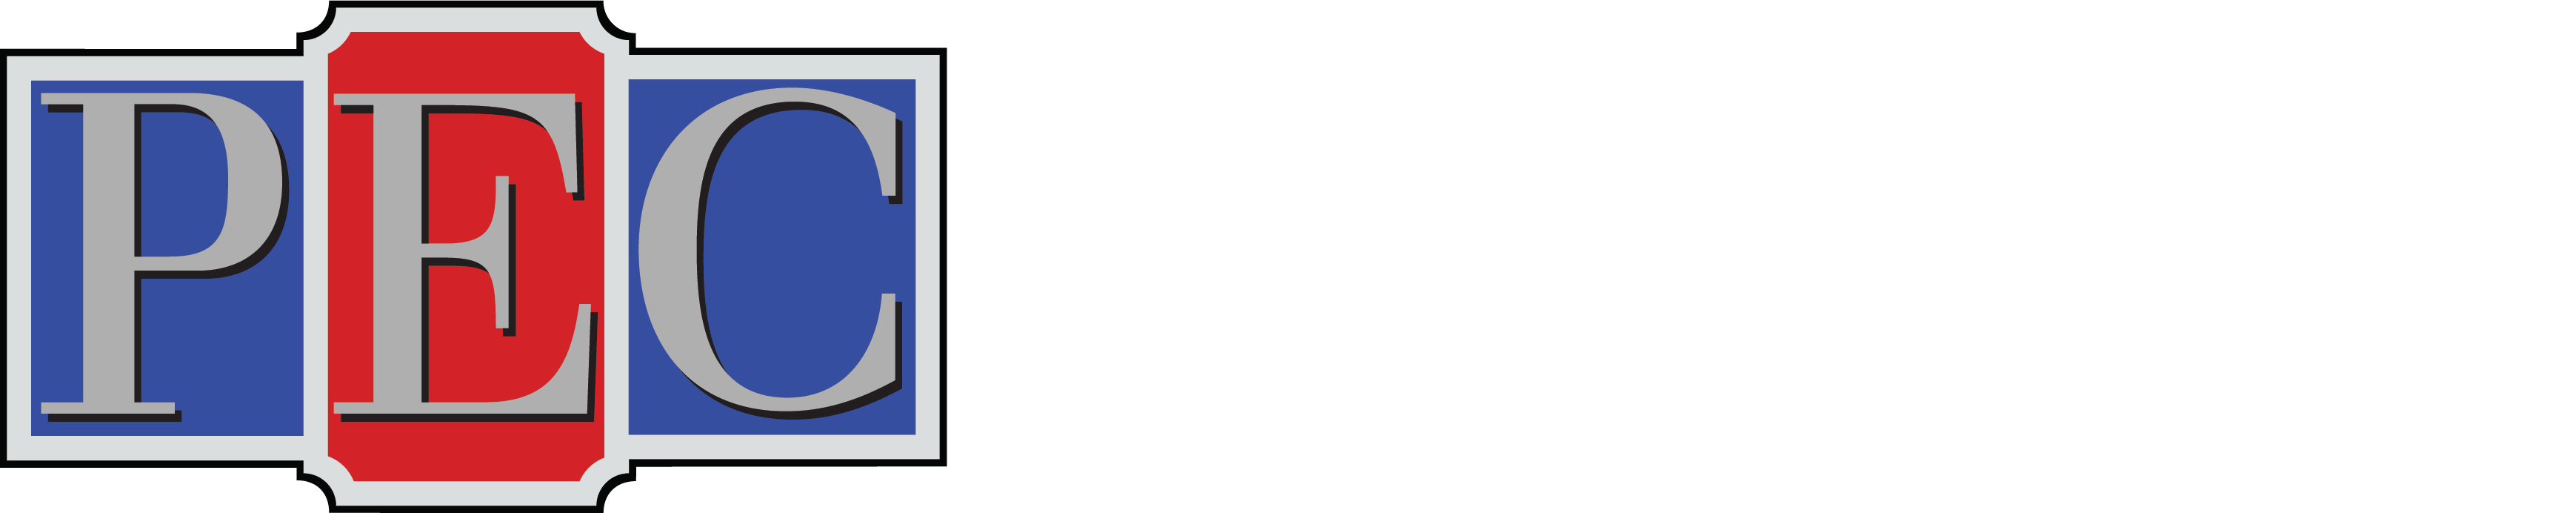 Pella Engraving & Sign Company logo